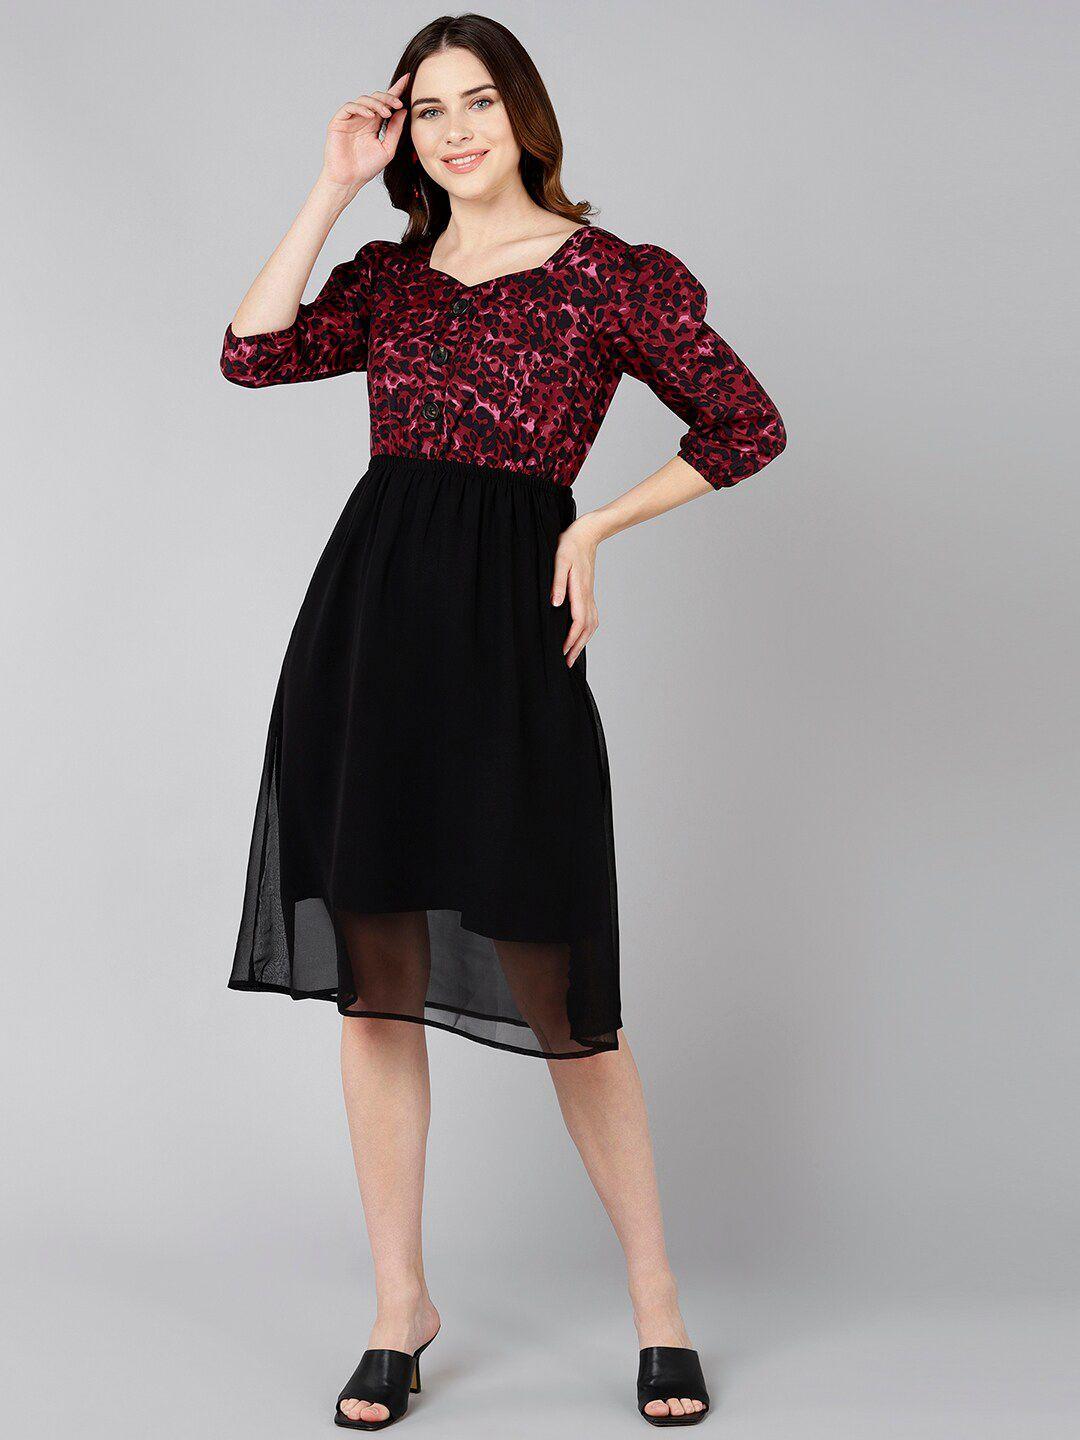 znx clothing women black & burgundy animal crepe dress